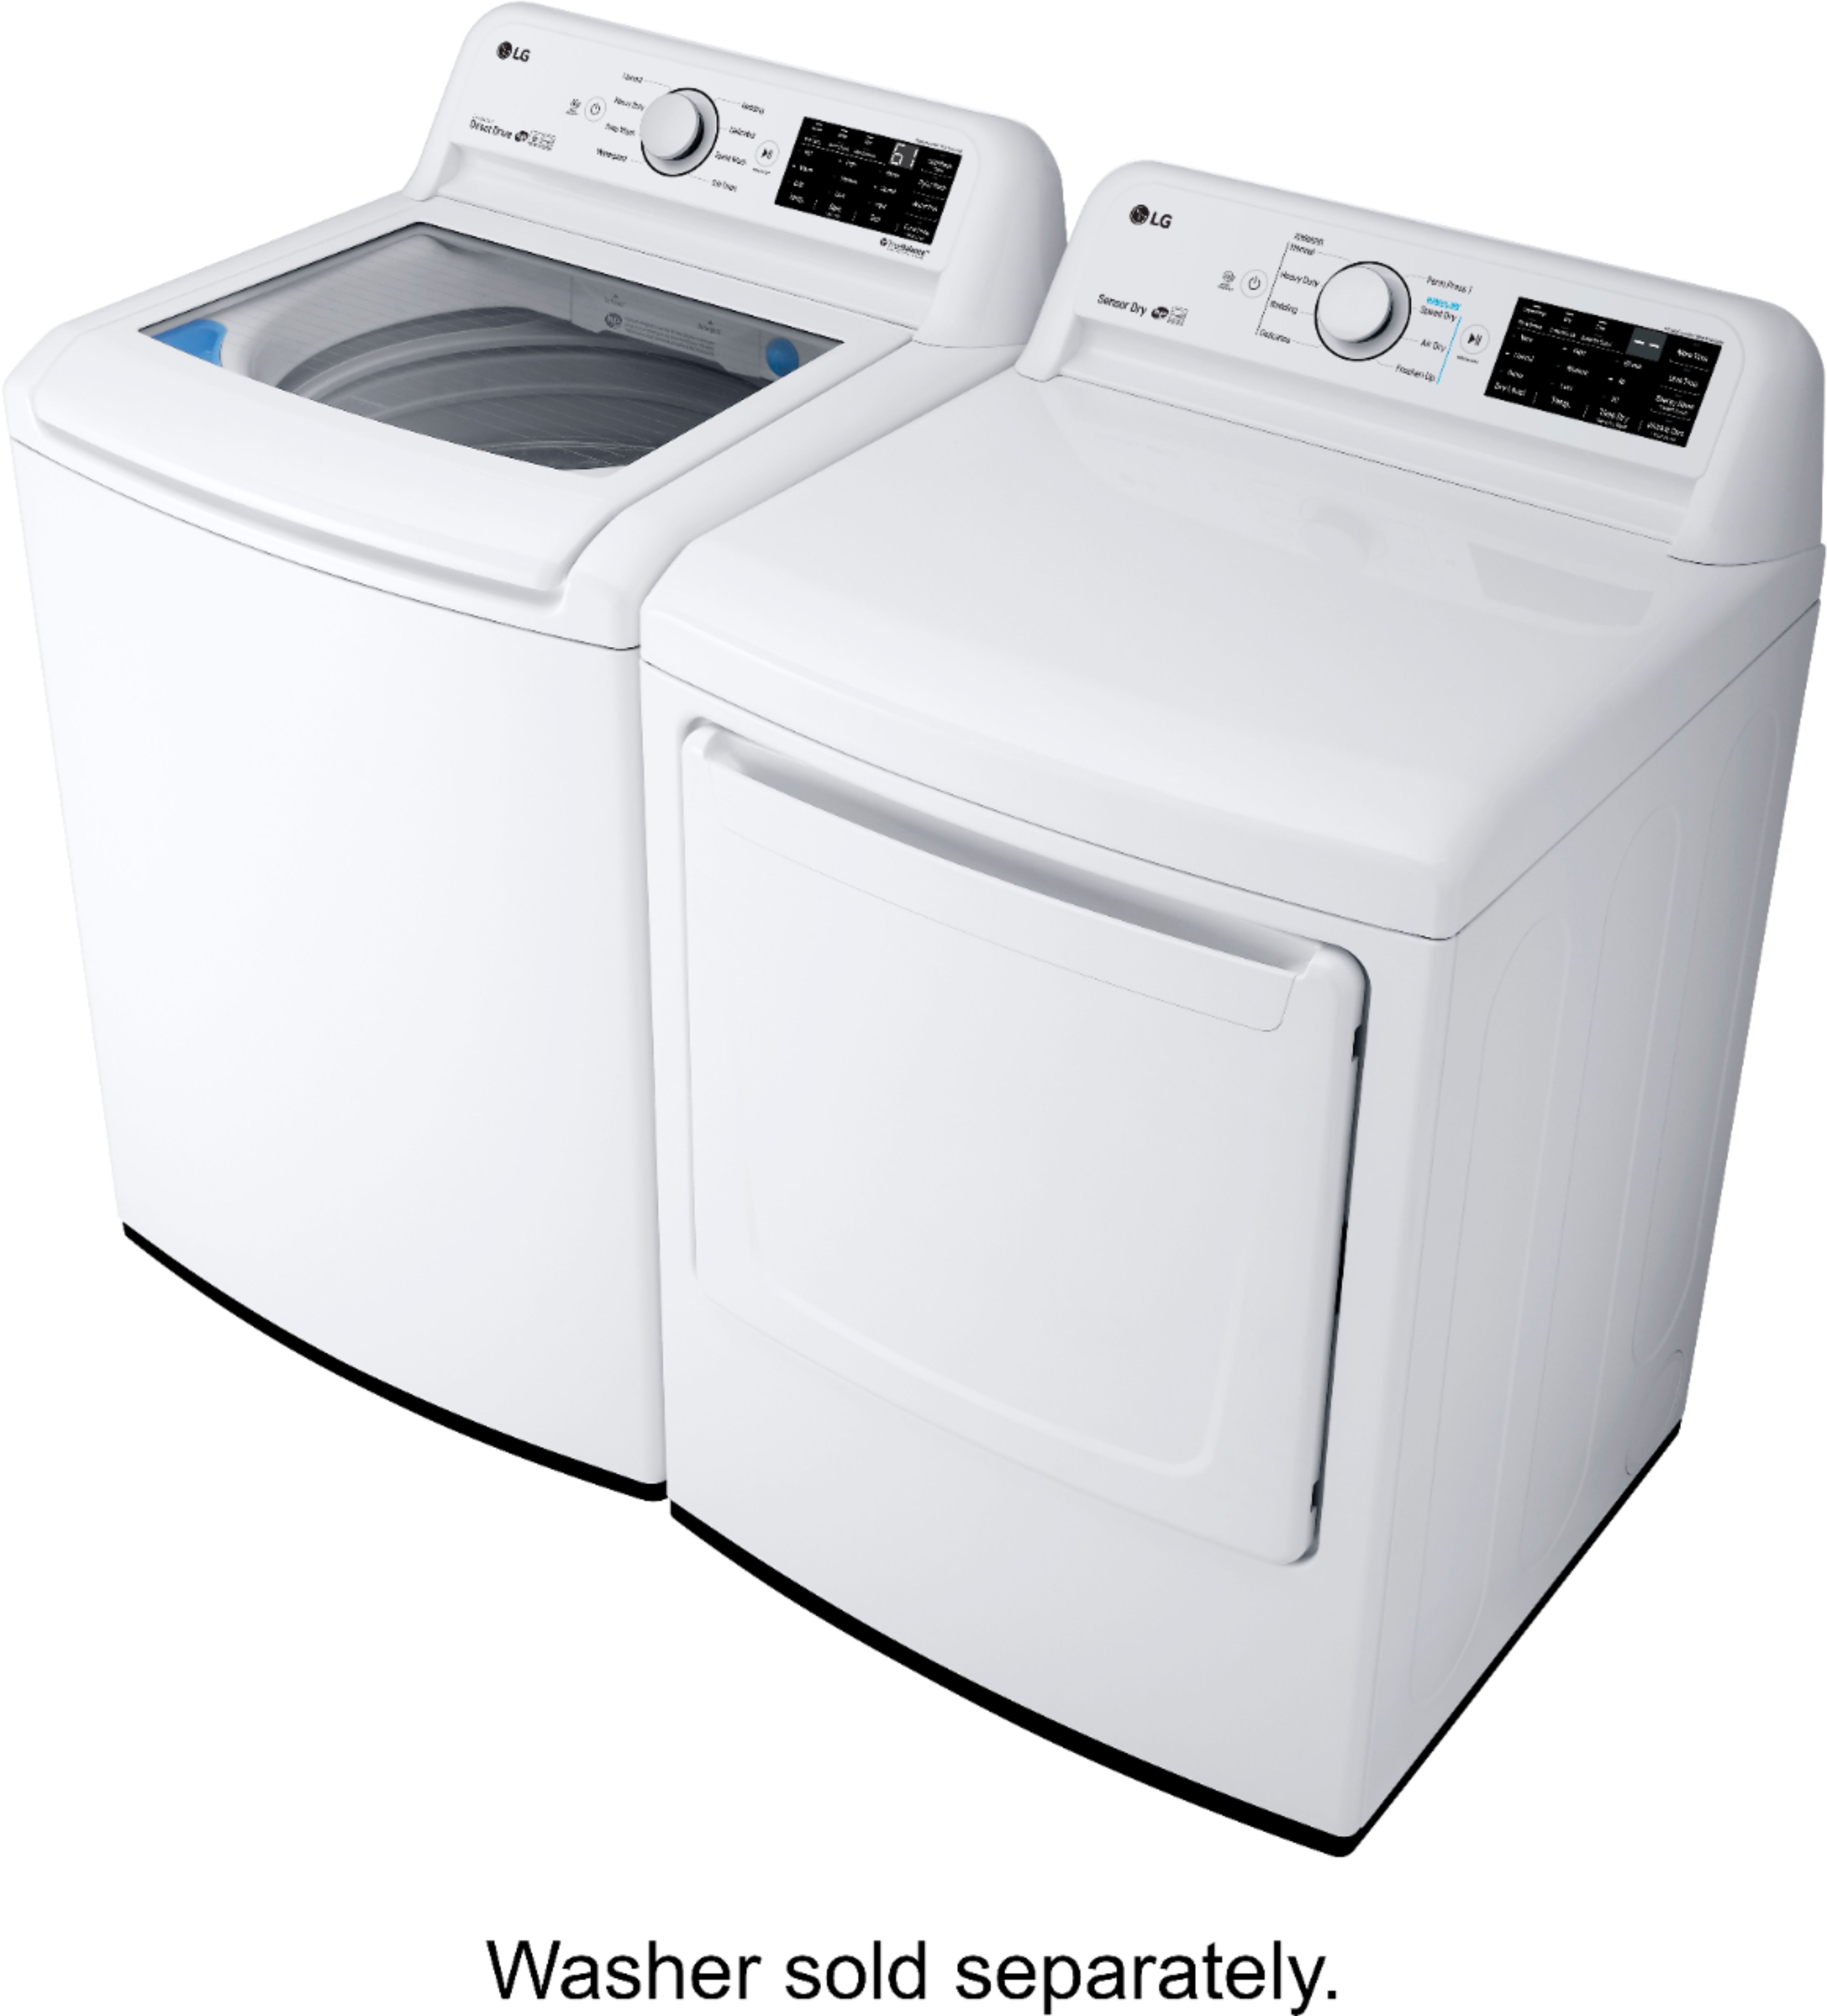 lg-7-3-cu-ft-gas-dryer-with-sensor-dry-white-dlg7101w-best-buy